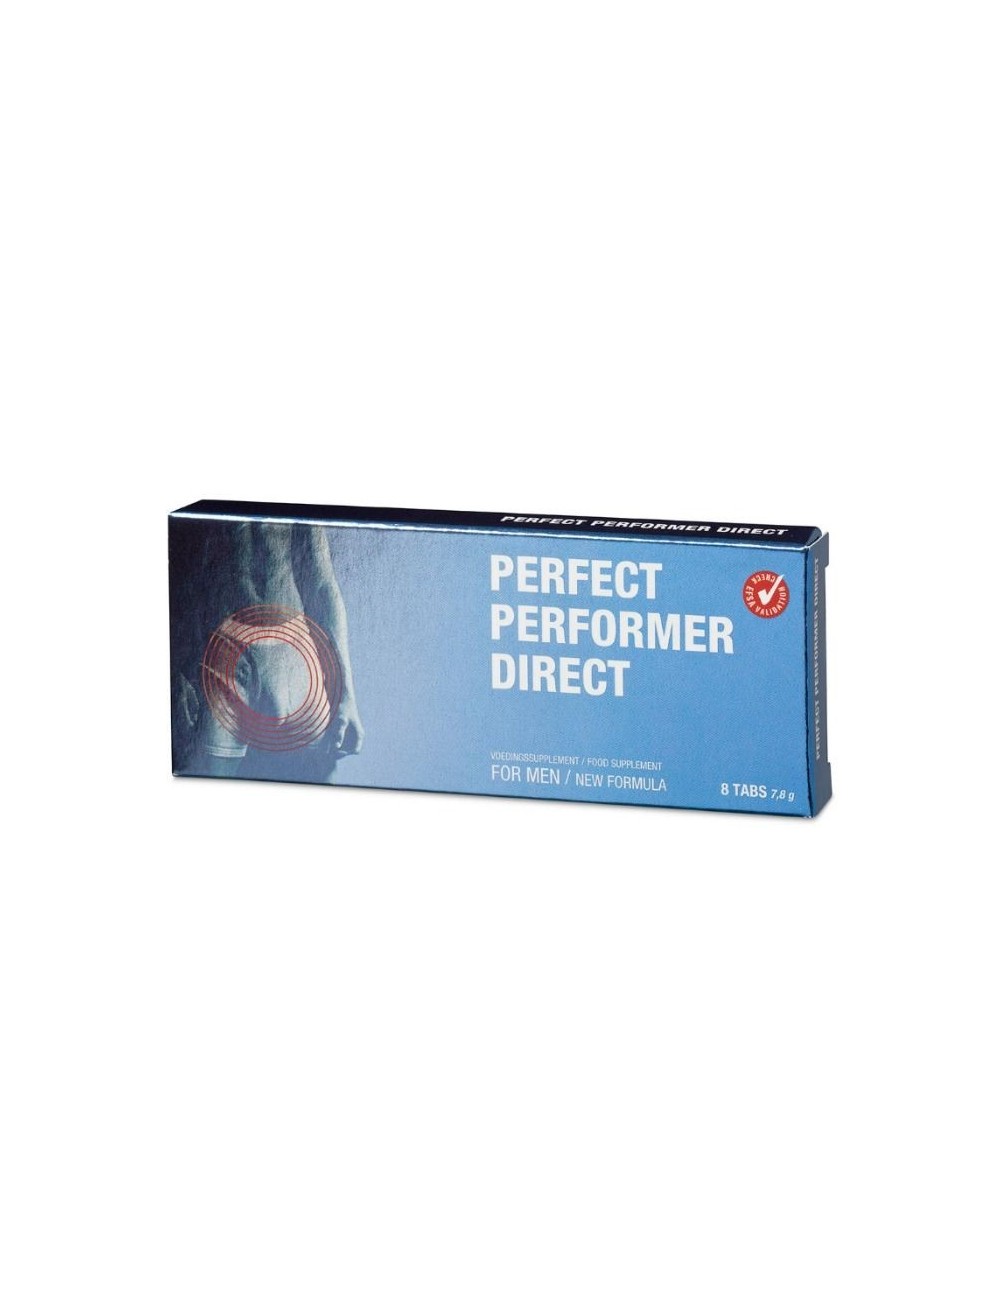 Onglets de montage direct perfect performer - Lubrifiants - Cobeco Pharma